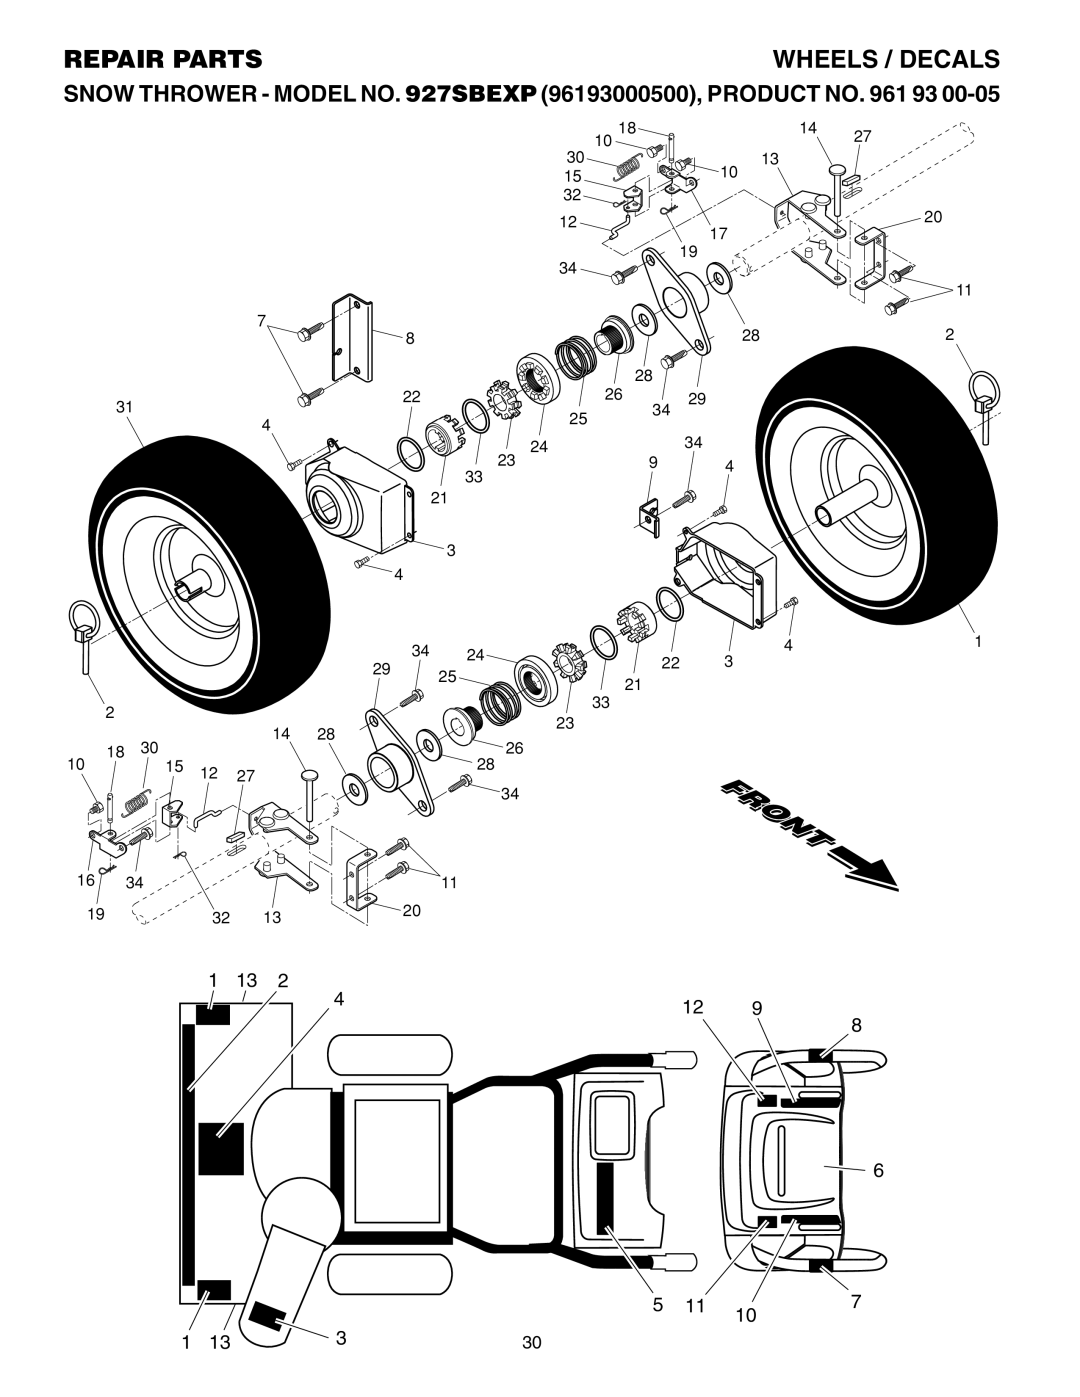 Husqvarna Wheels / Decals, Repair Parts, SNOW THROWER - MODEL NO. 927SBEXP 96193000500, PRODUCT NO. 961 93, 1 13 